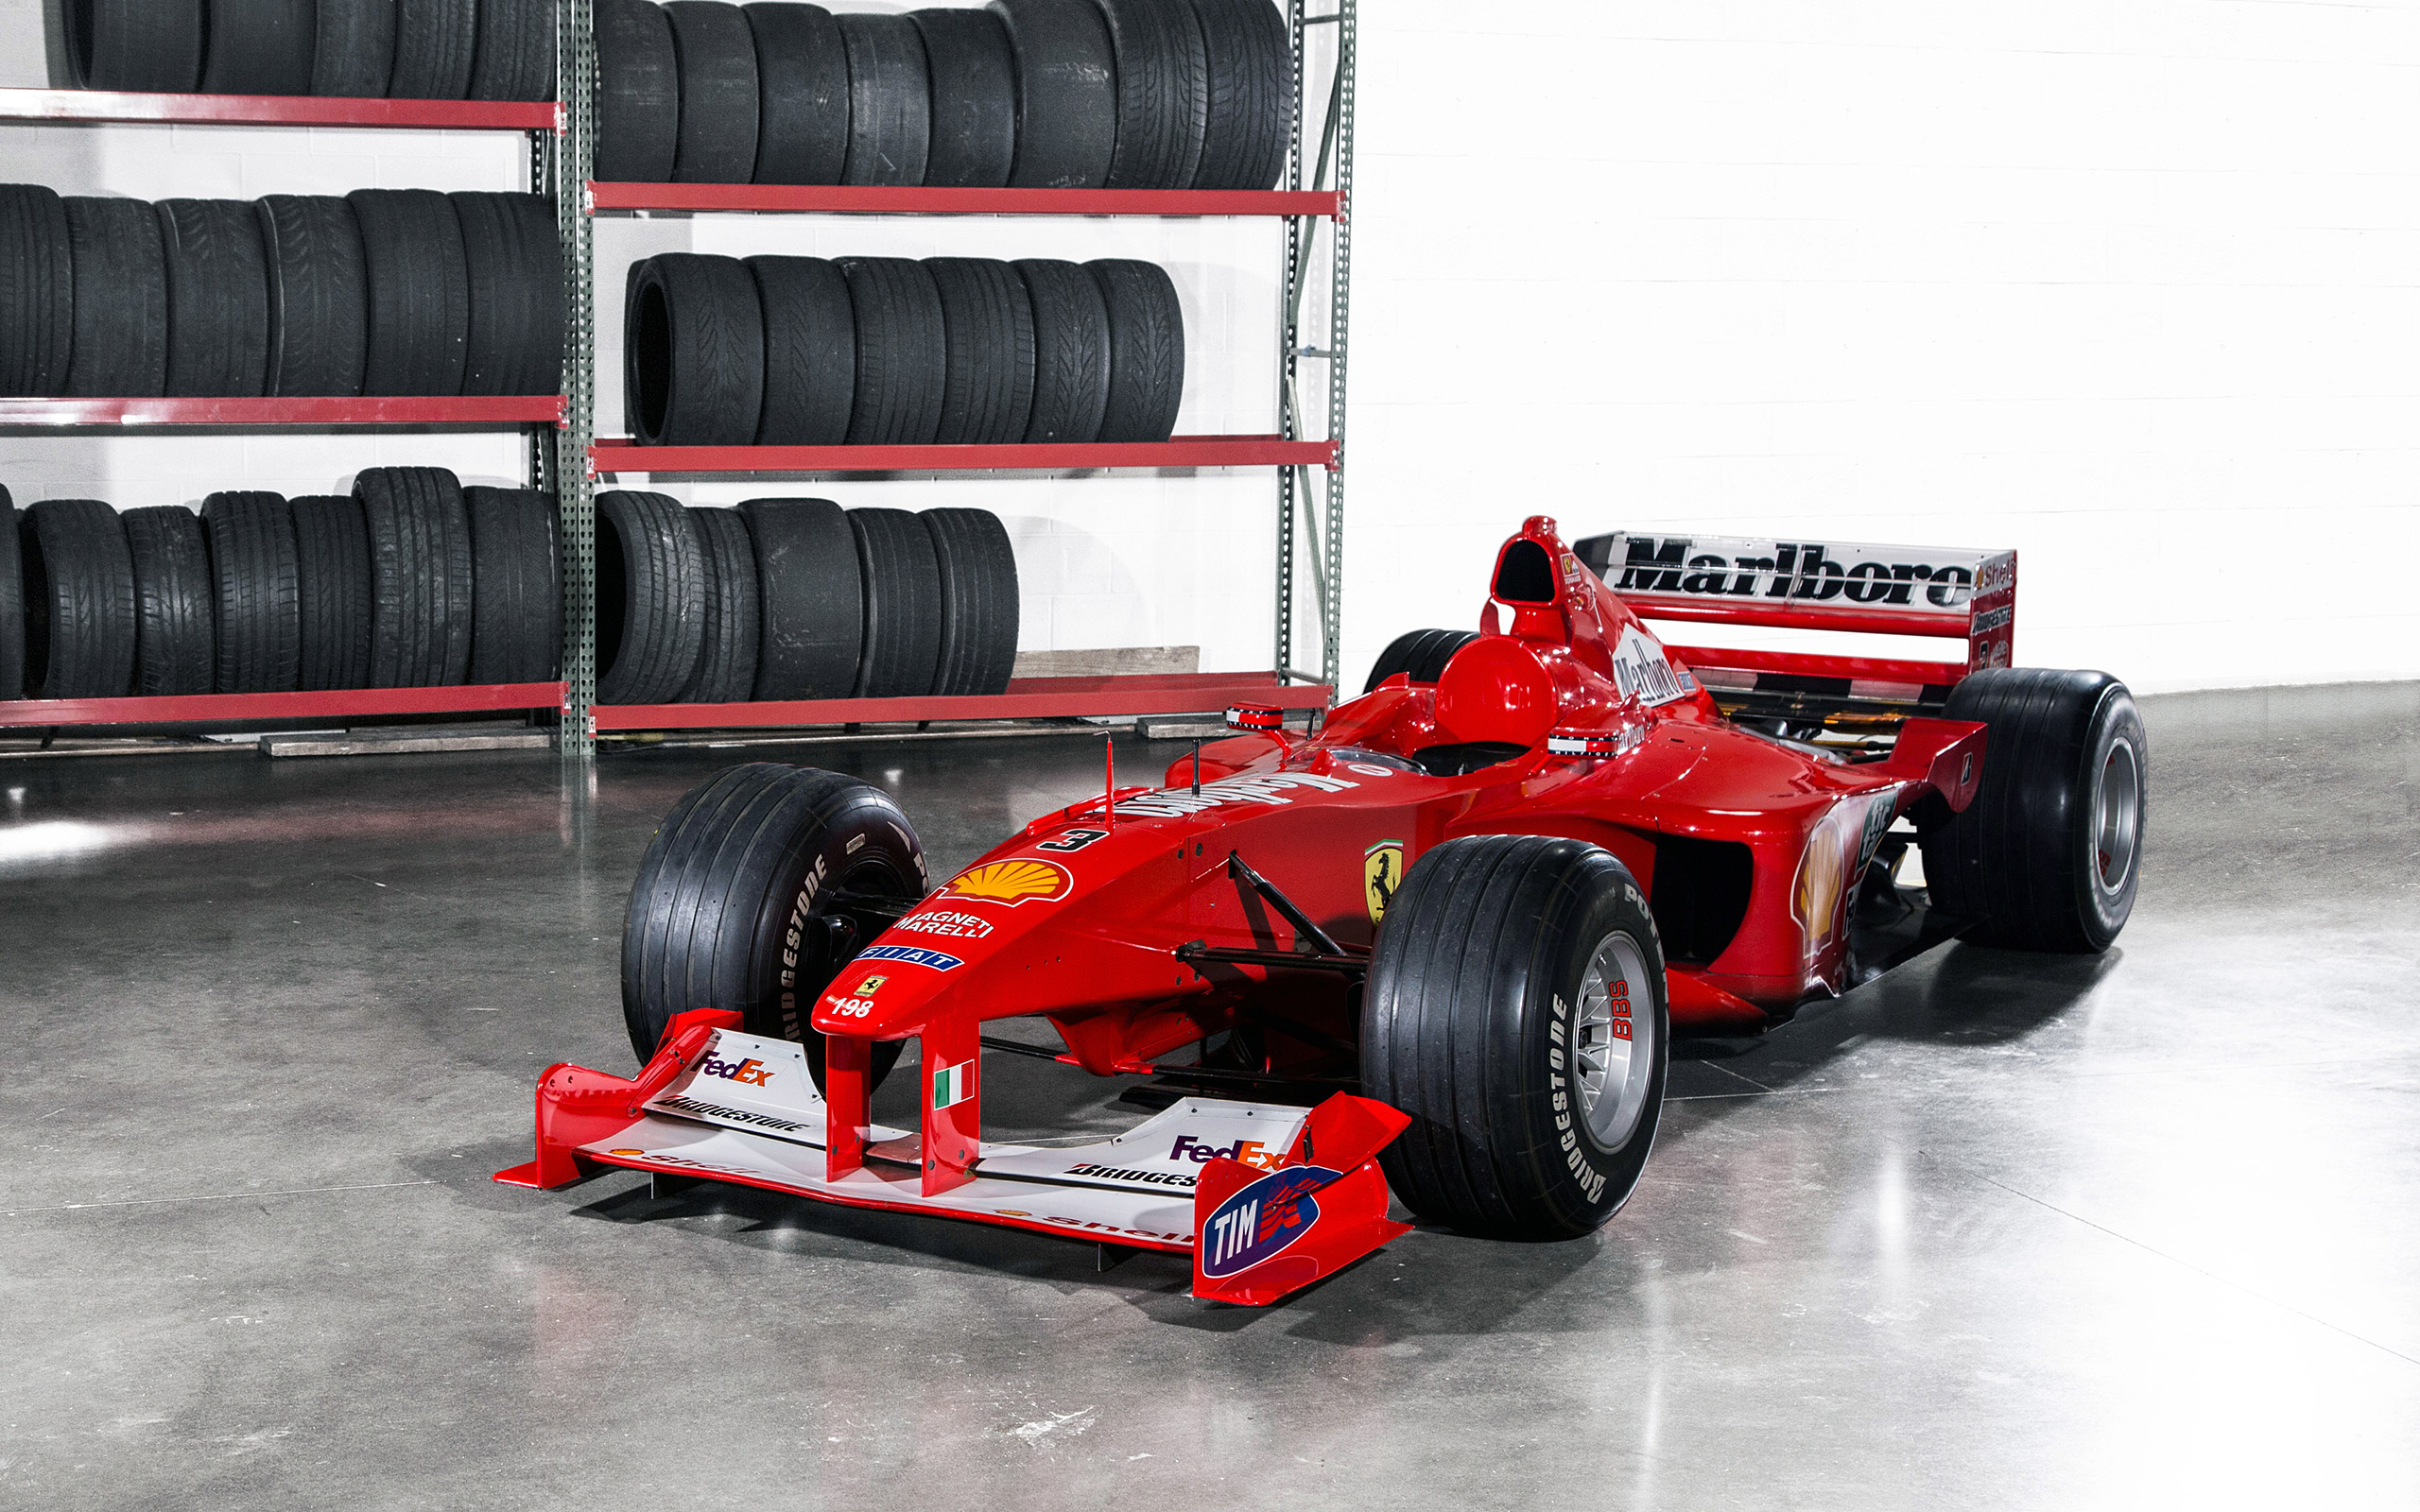  2000 Ferrari F2000 Wallpaper.